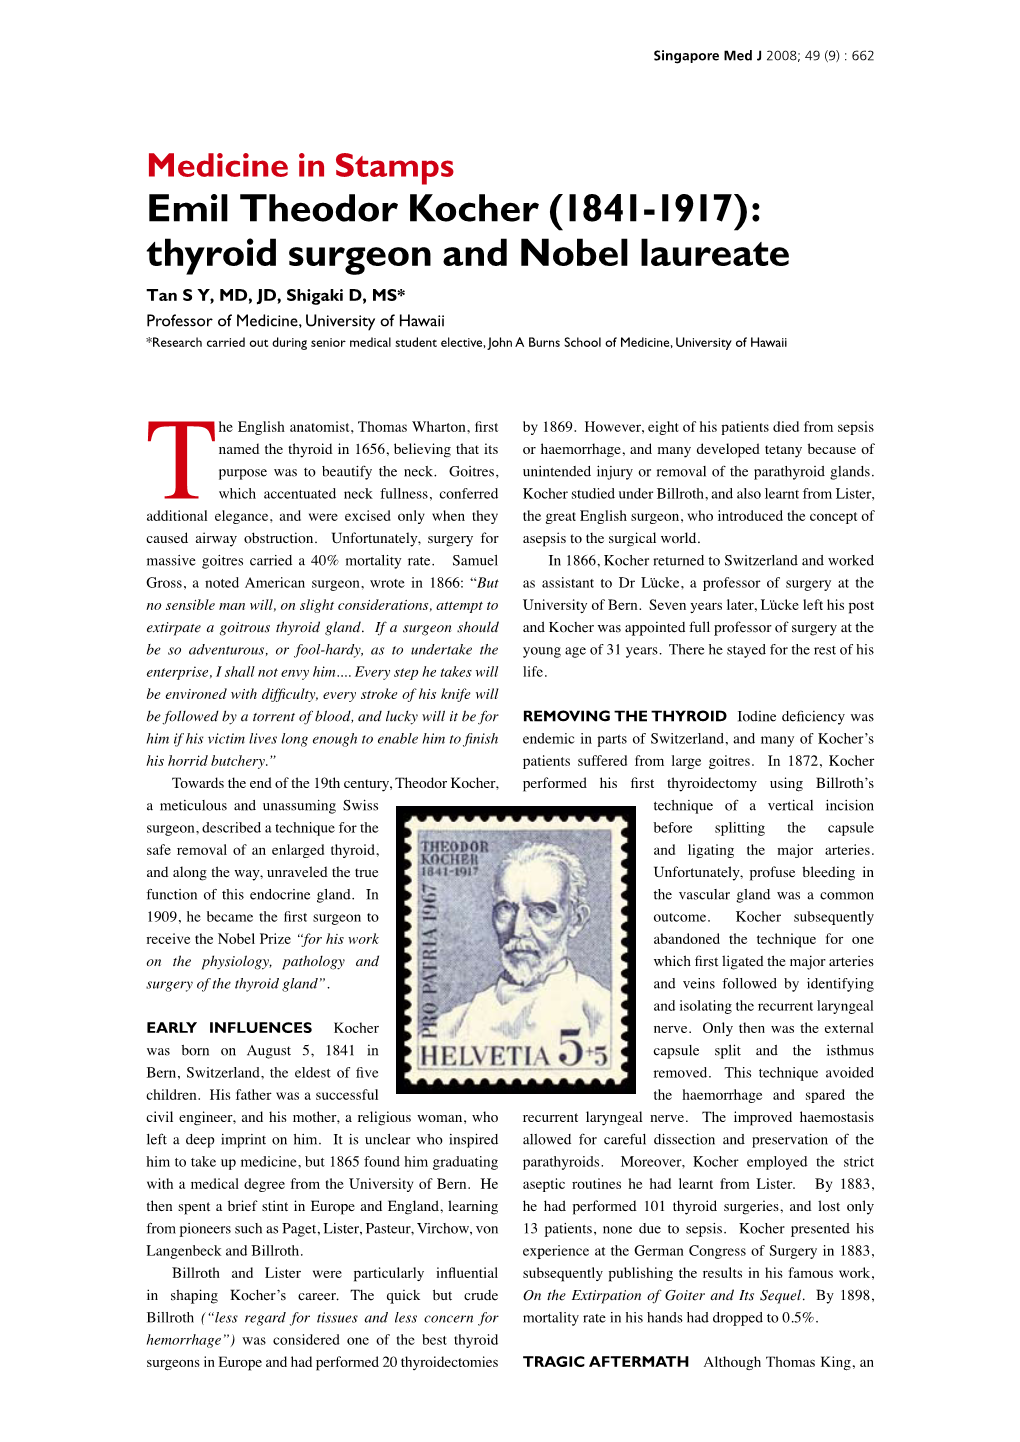 Emil Theodor Kocher (1841-1917): Thyroid Surgeon and Nobel Laureate